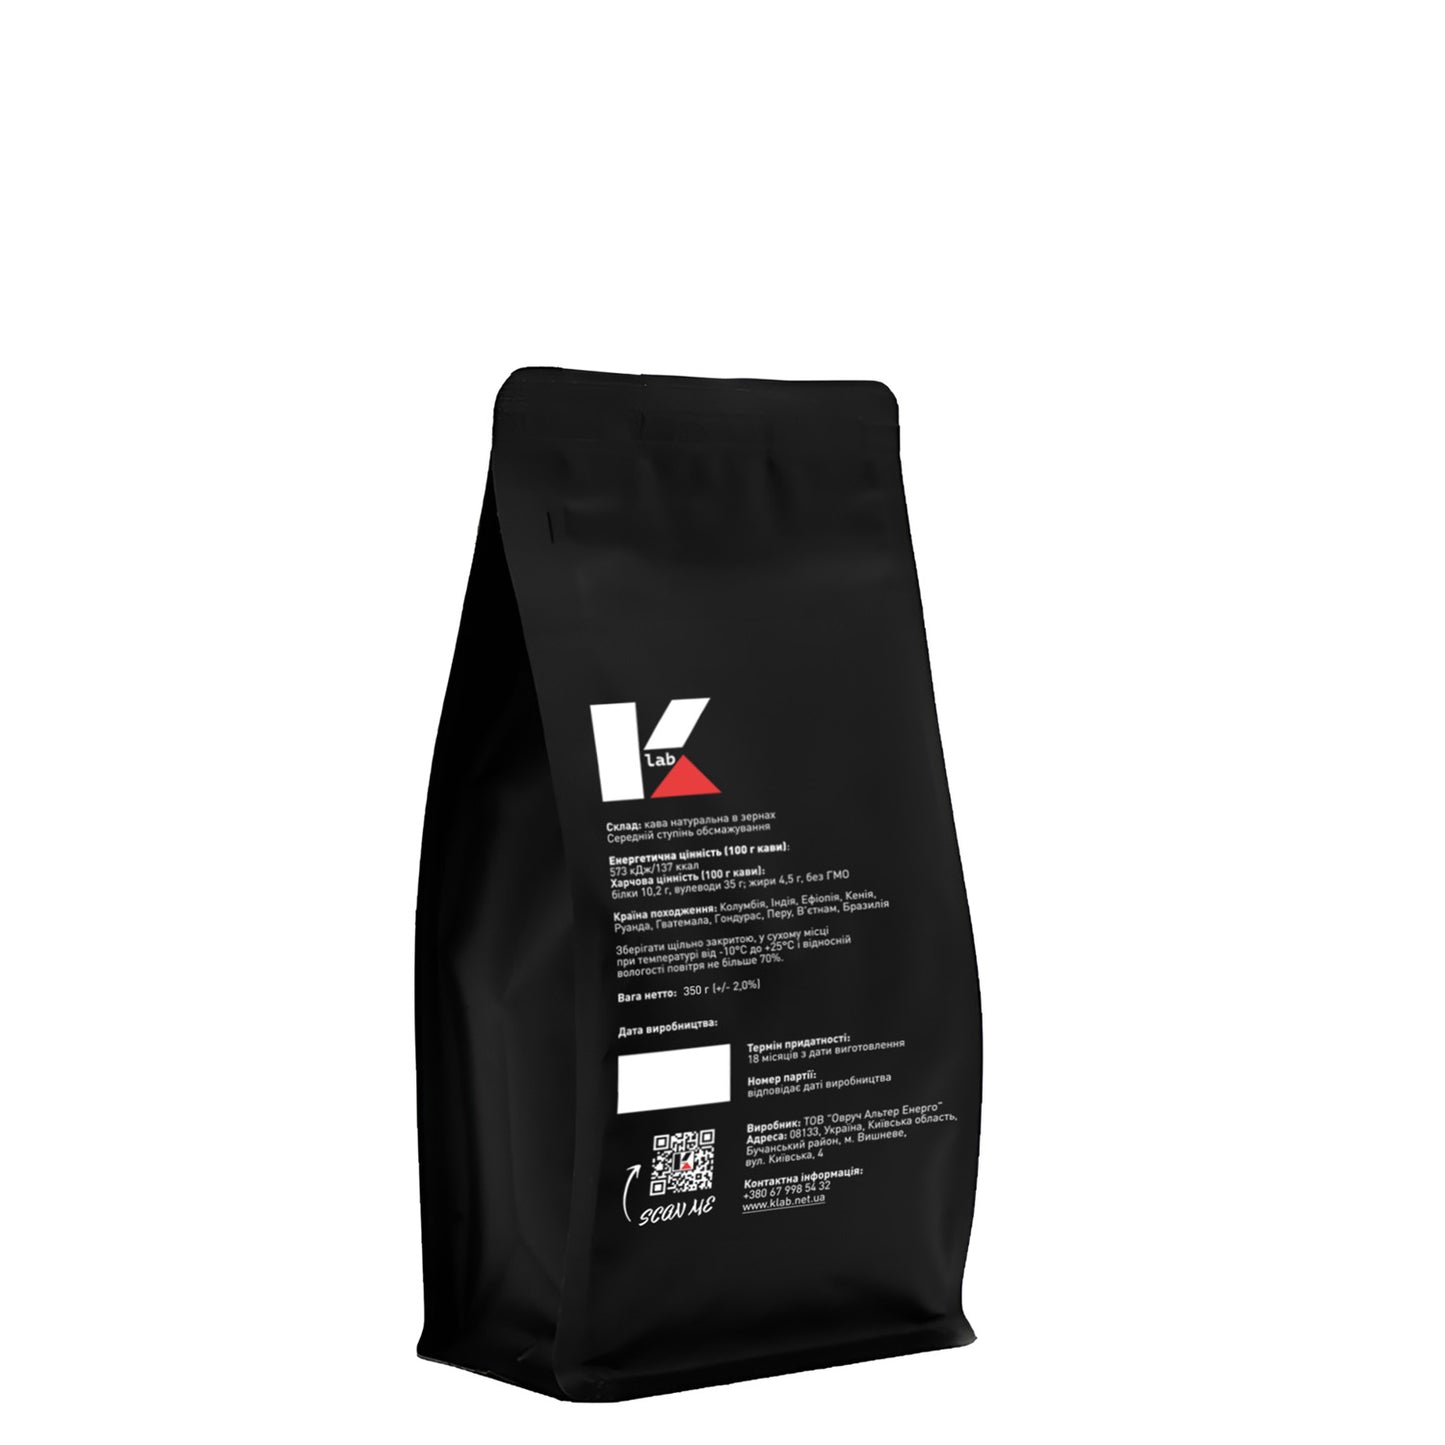 COFFEE STORY №2 - Klab (0.35kg back)